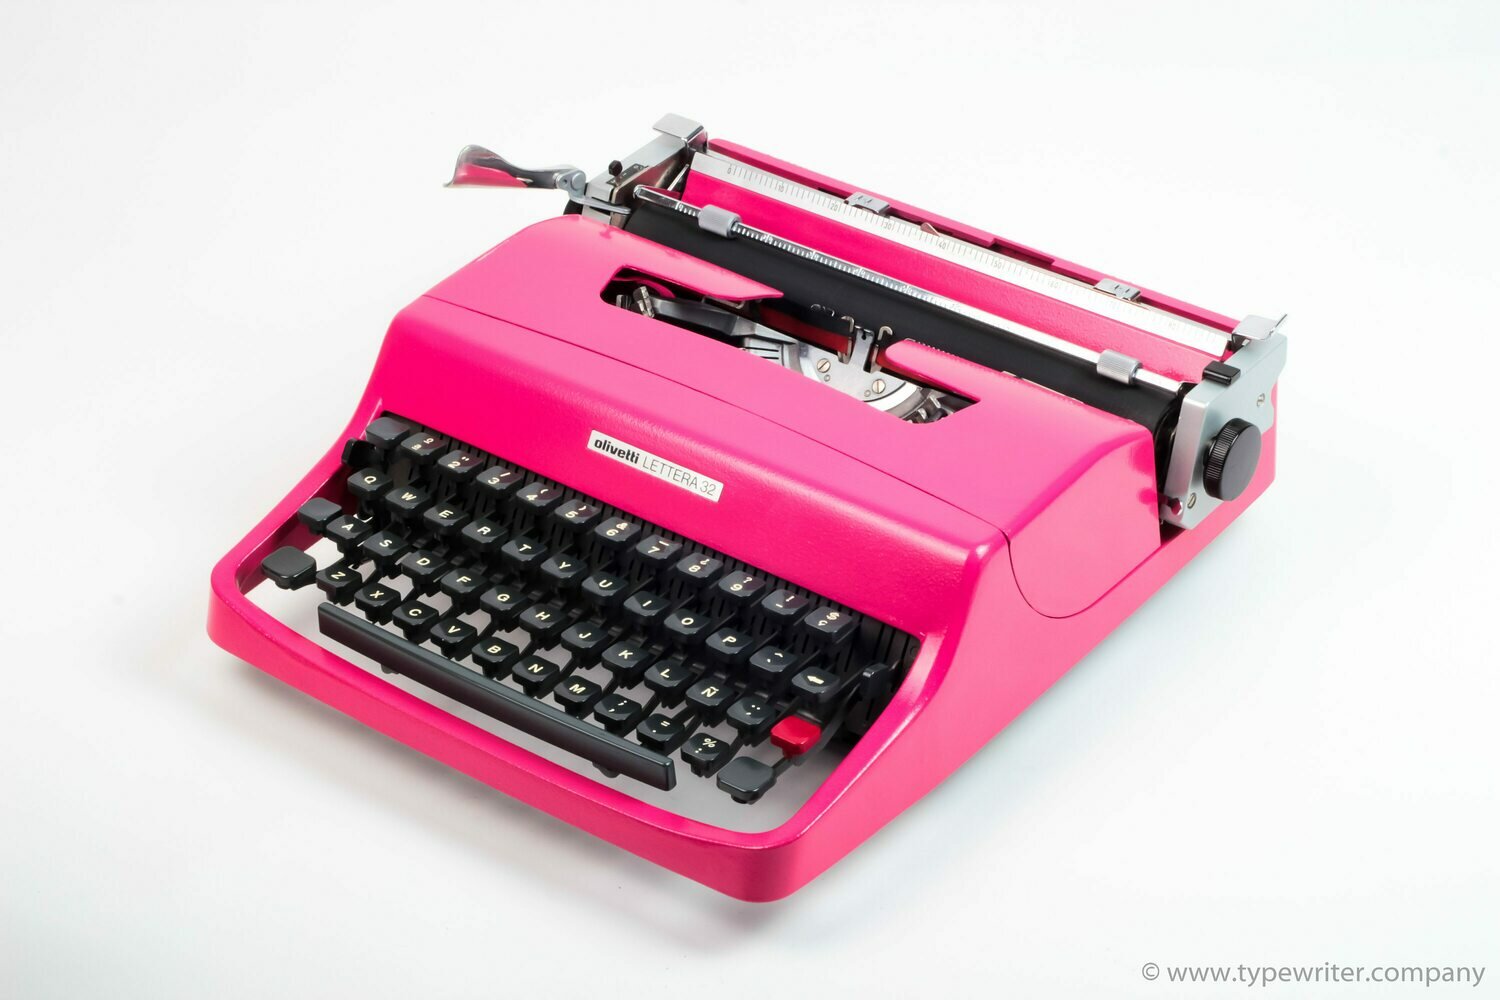 Lady Gaga's Olivetti Lettera 32 Pink Typewriter